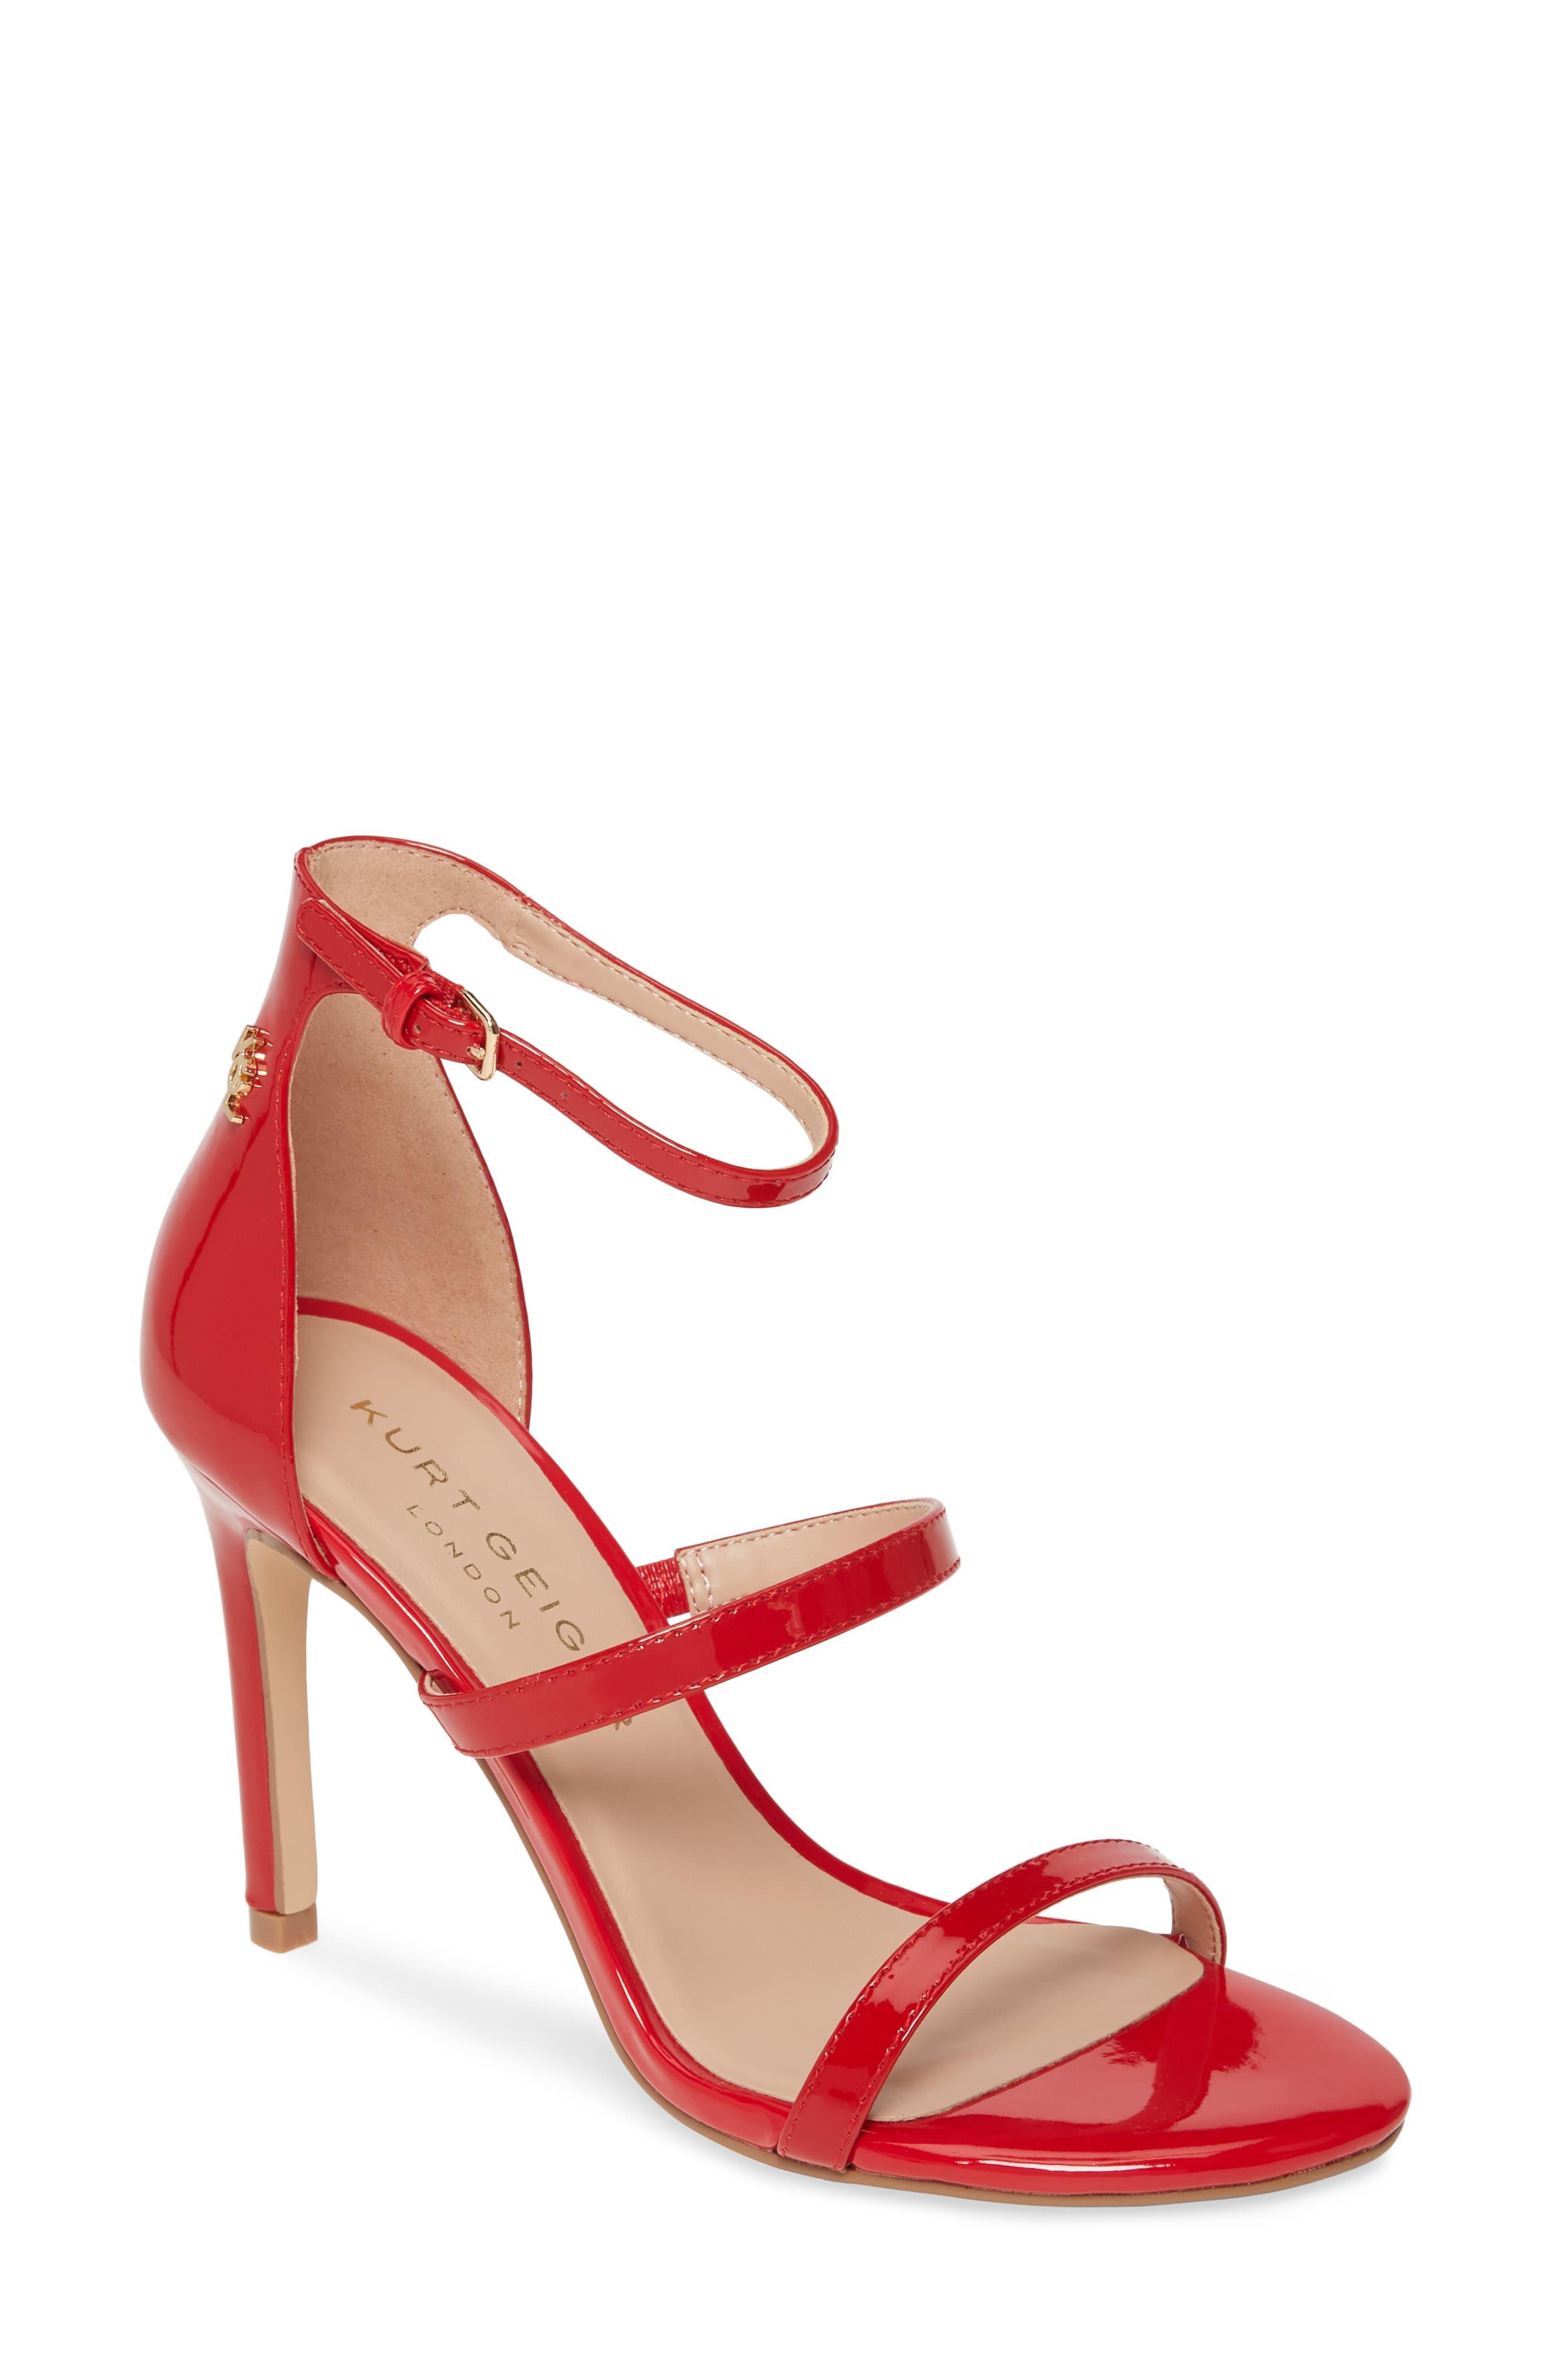 Kurt Geiger Red Patent Leather High-heel Sandals - Save 6% - Lyst